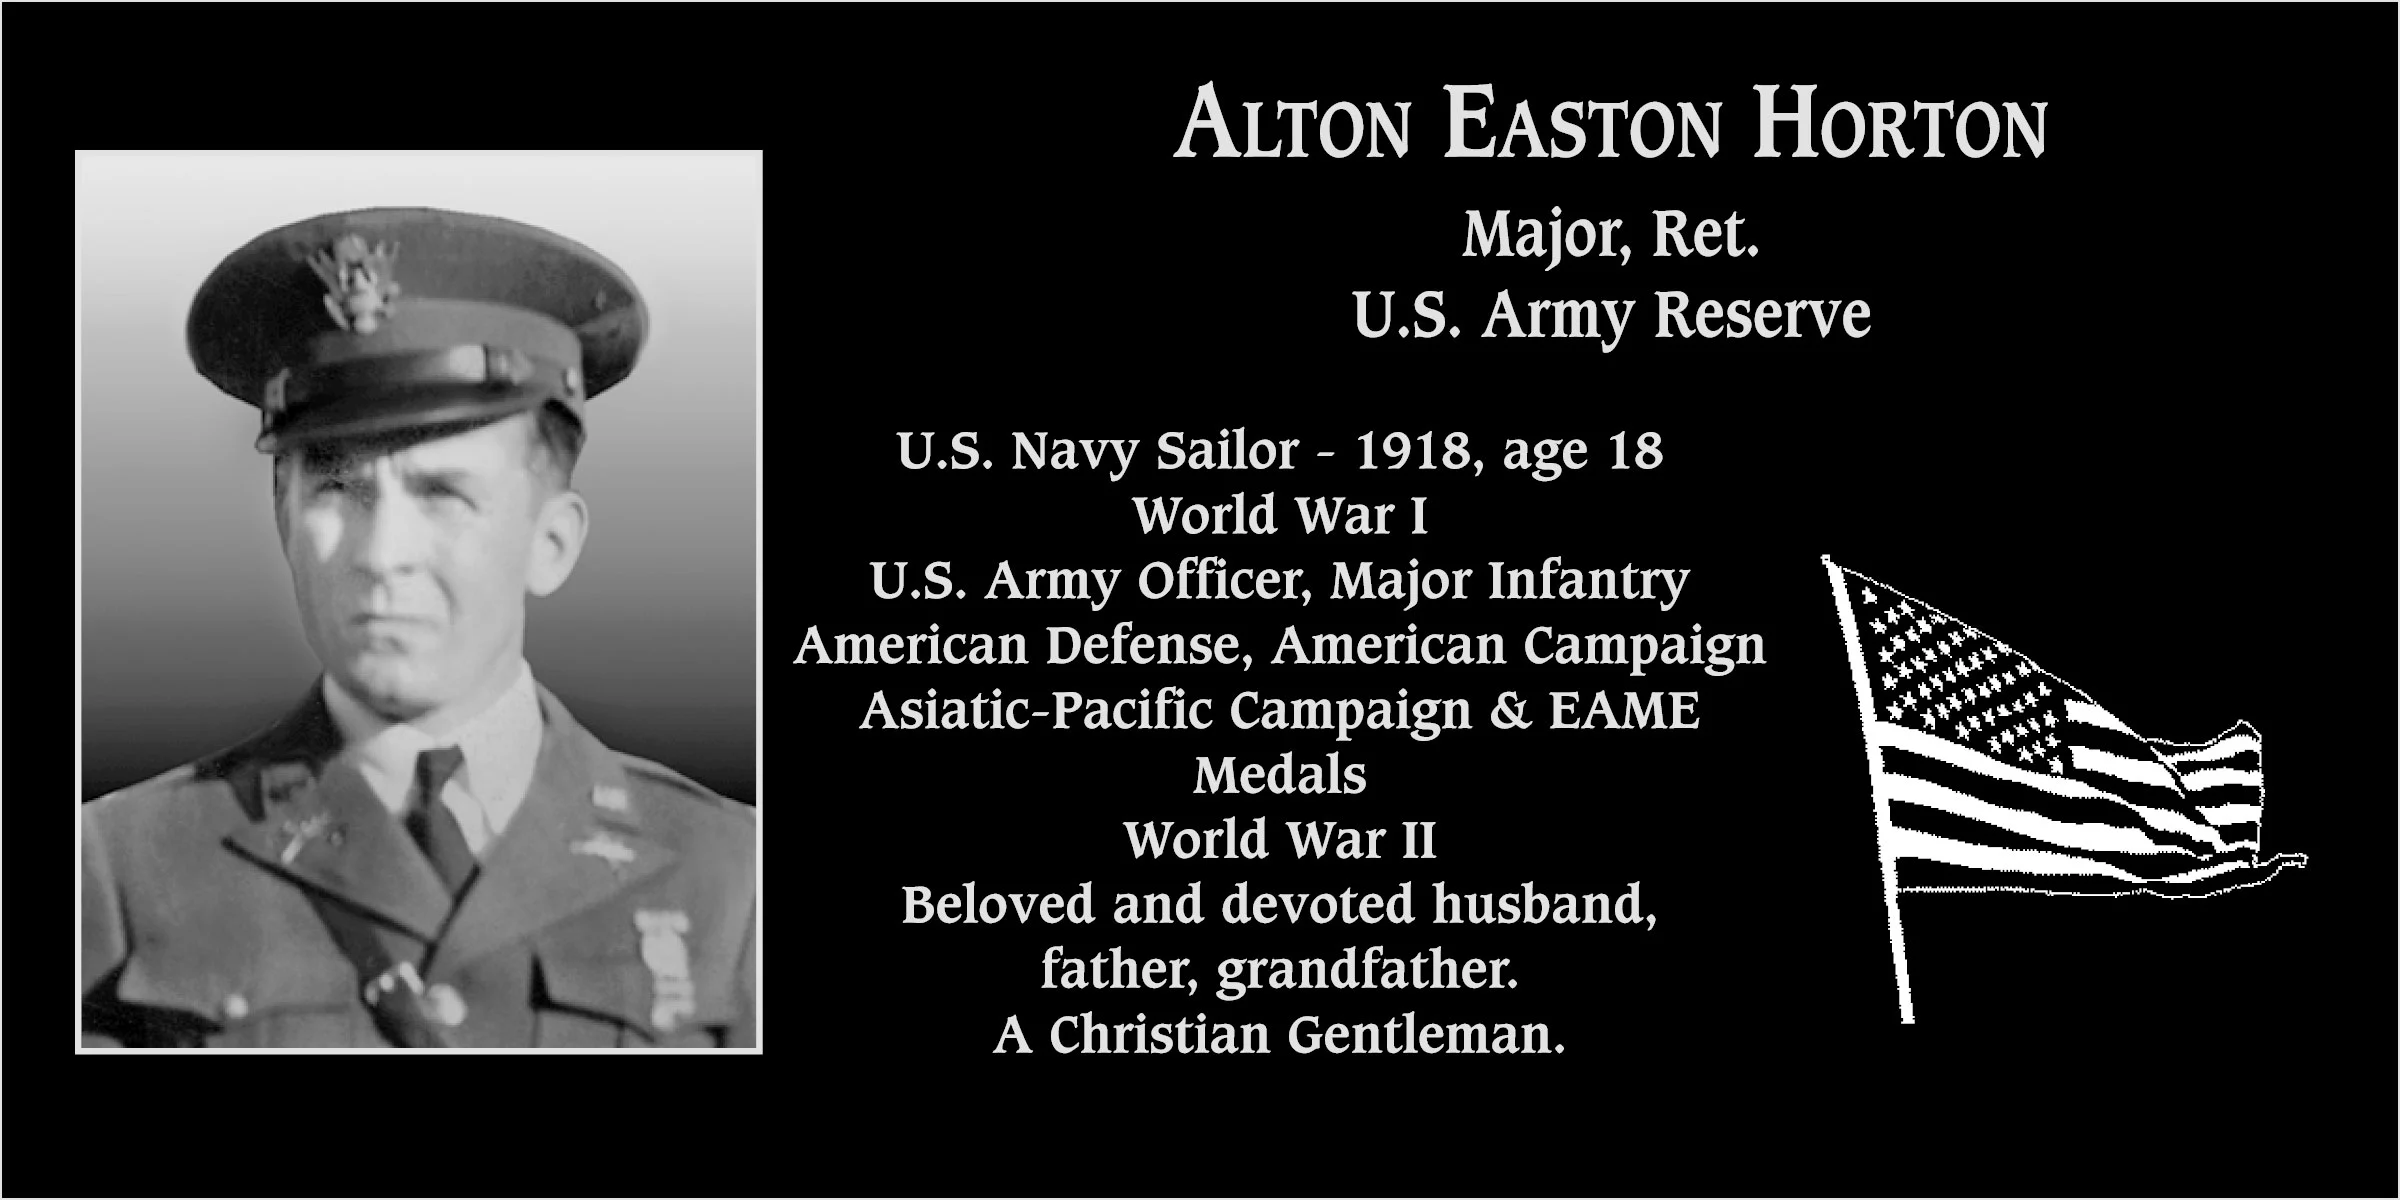 Alton Easton Horton